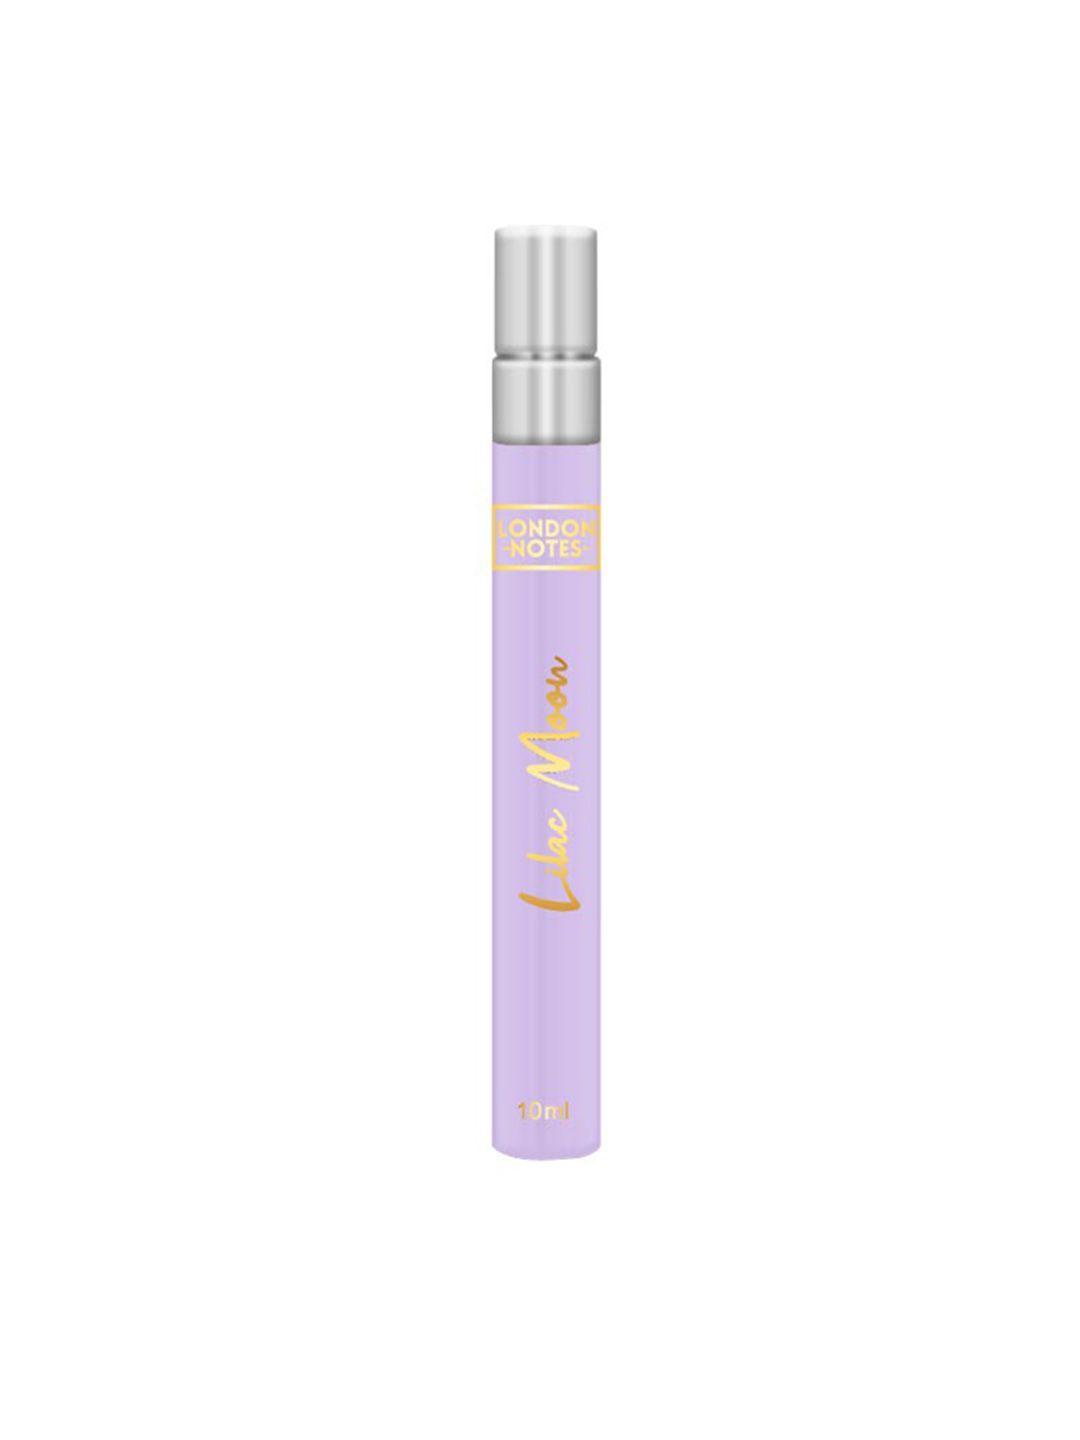 newu women london notes lilac moon eau de parfum - 10ml